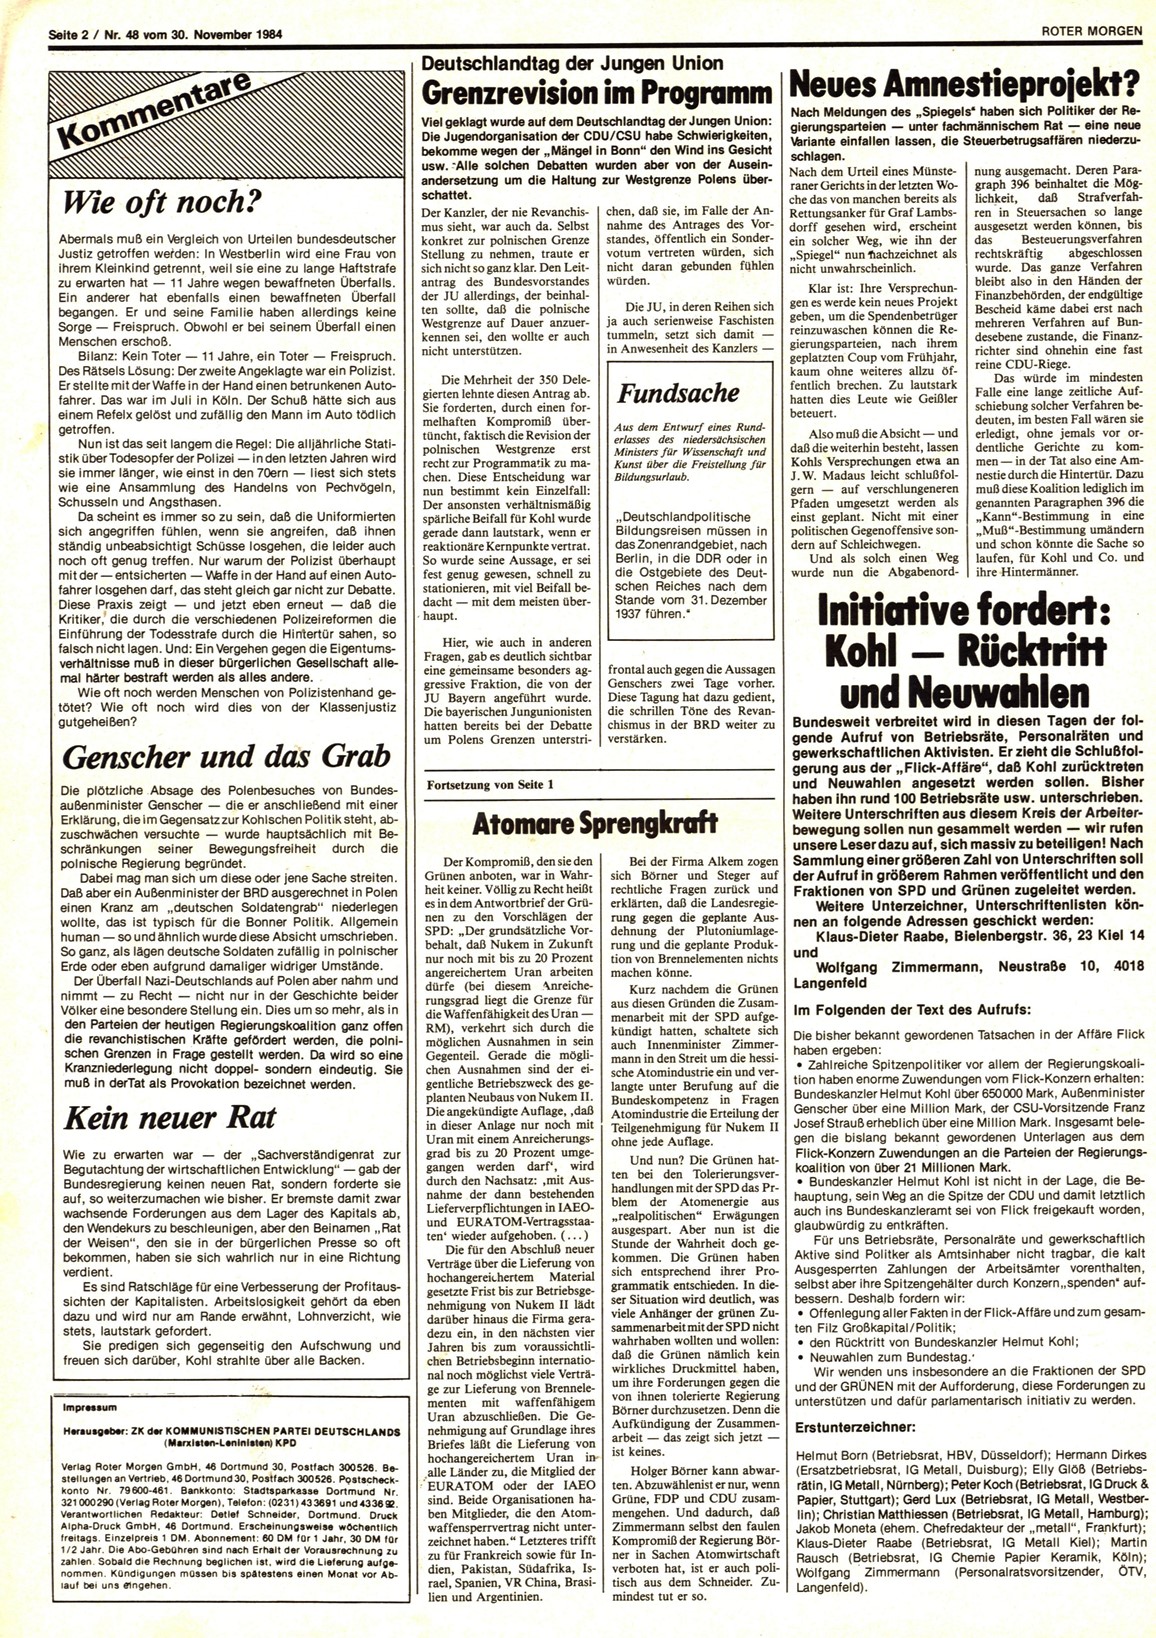 Roter Morgen, 18. Jg., 30. November 1984, Nr. 48, Seite 2